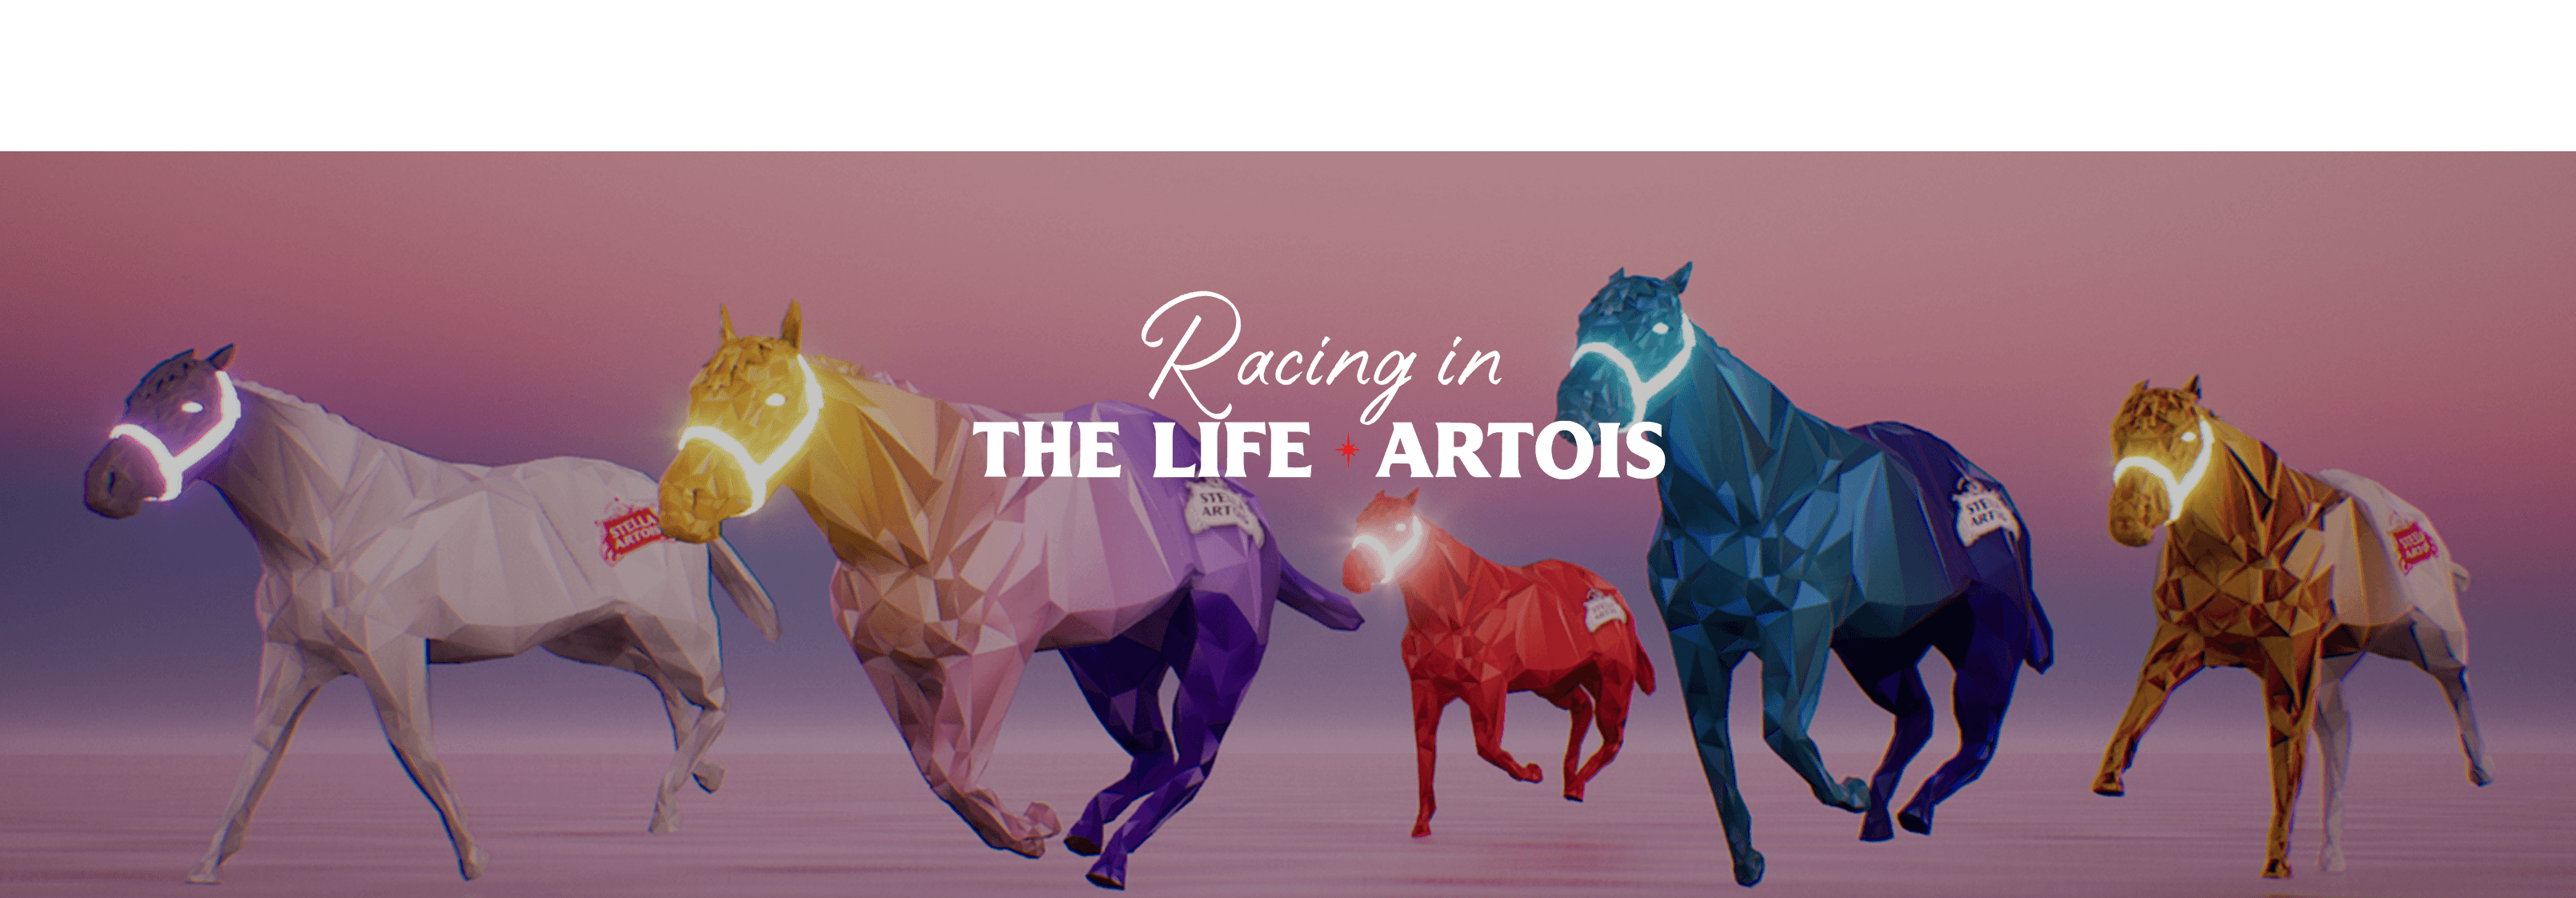 Stella Artois - Racing in THE LIFE ARTOIS